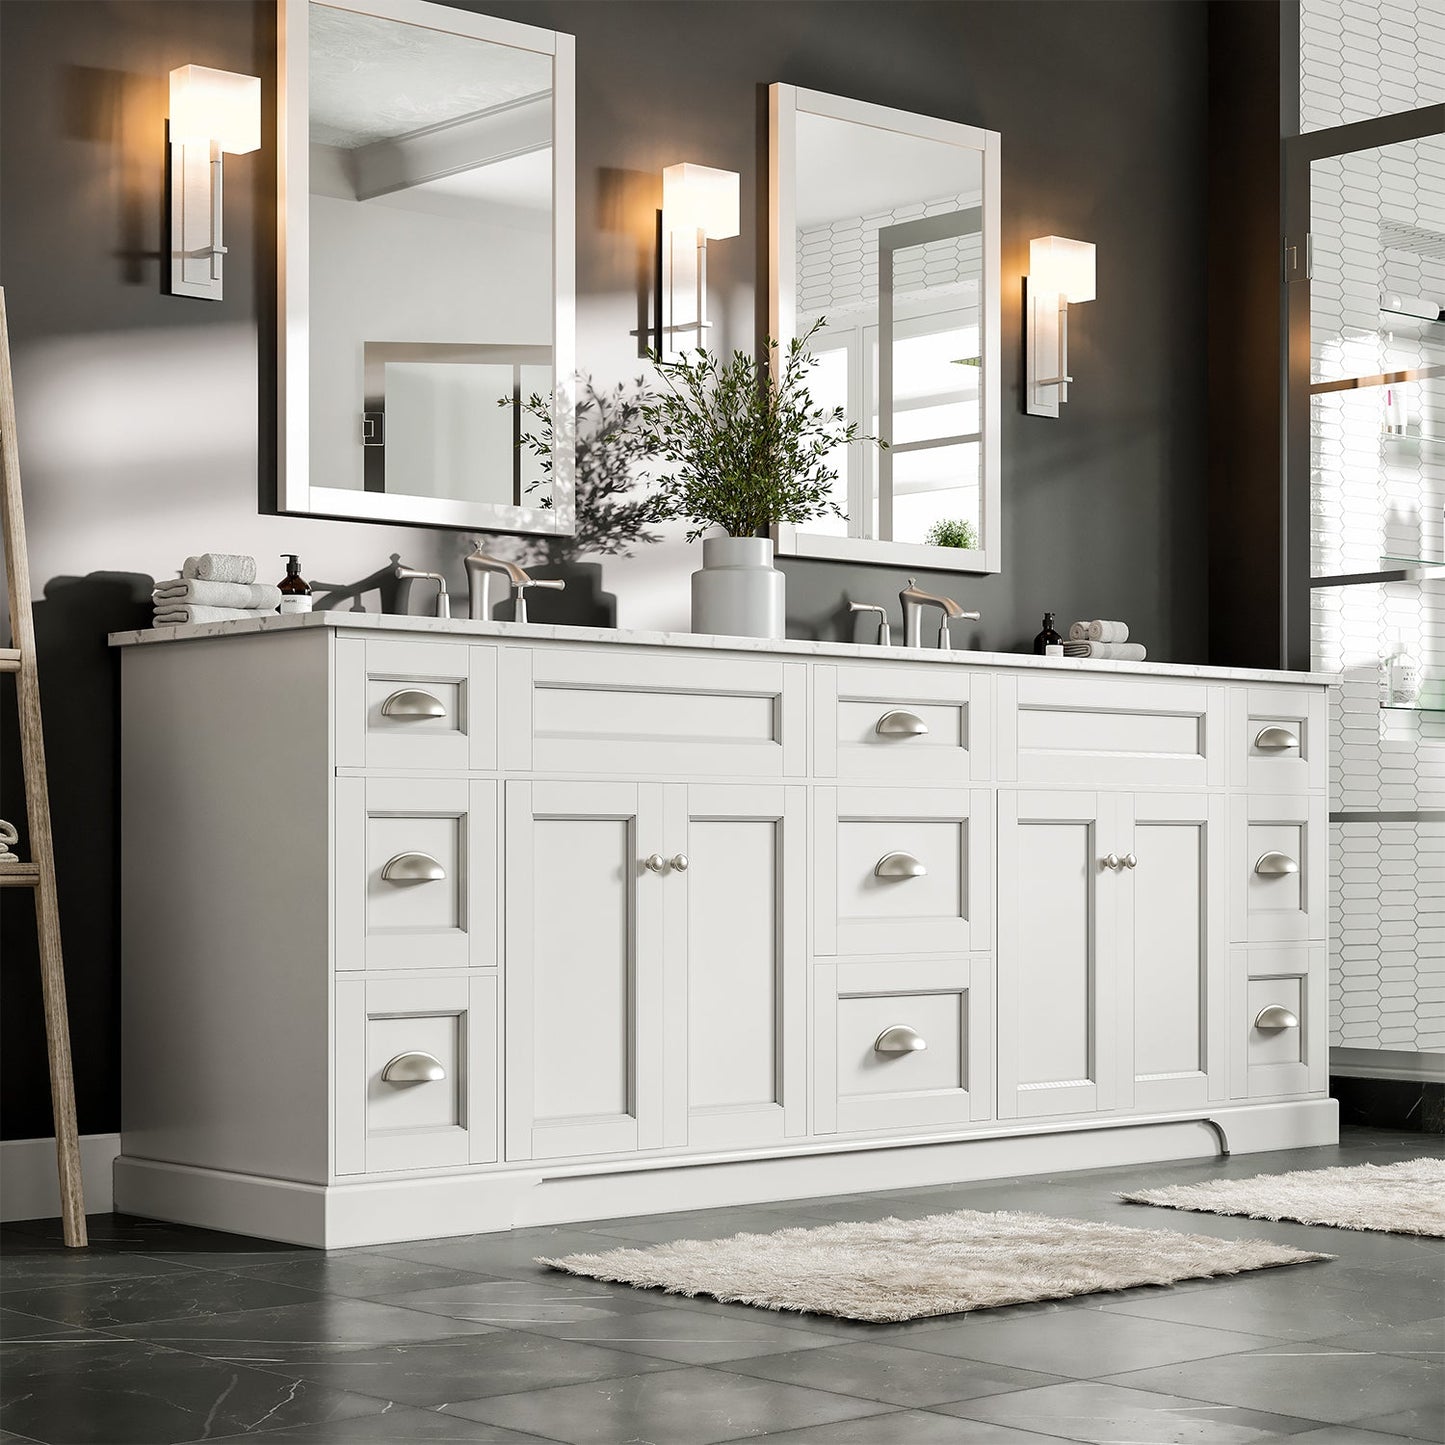 Epic 84"W x 22"D White Double Sink Bathroom Vanity with Carrara Quartz Countertop and Undermount Porcelain Sink